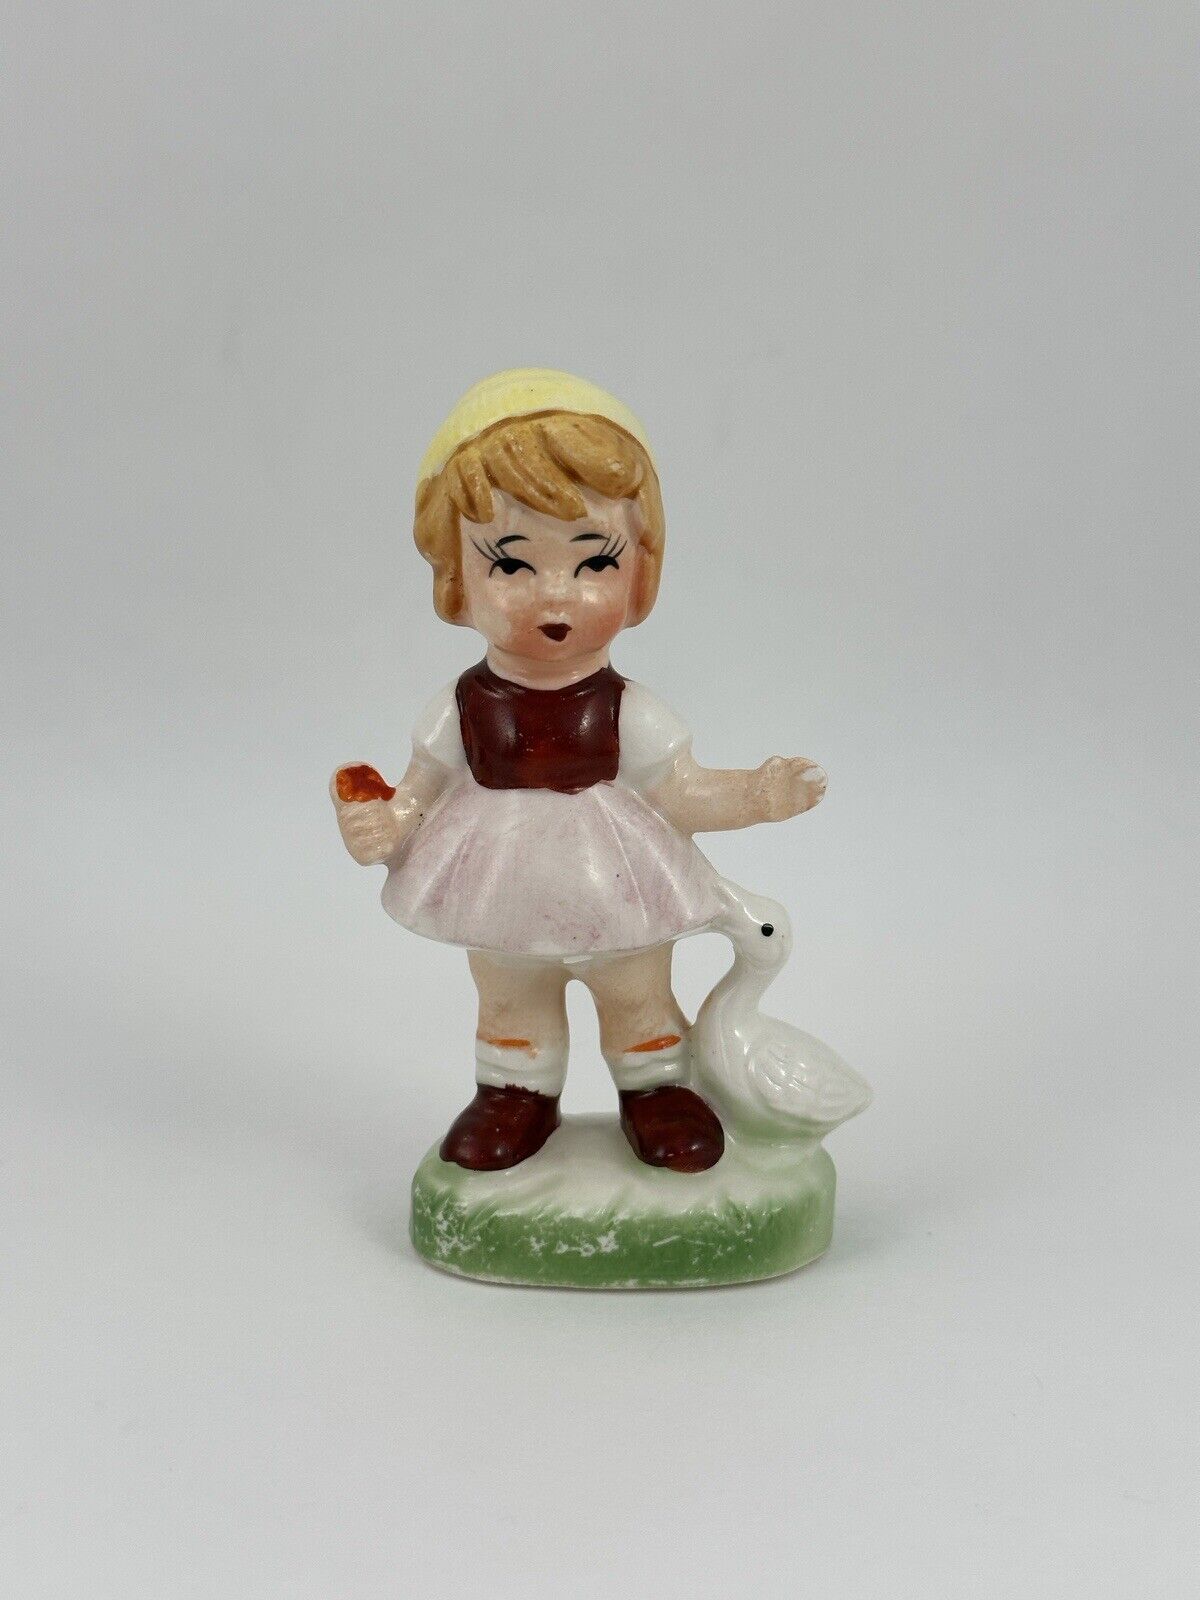 Vintage Ceramic Figurine Farm Girl and Duck 4”